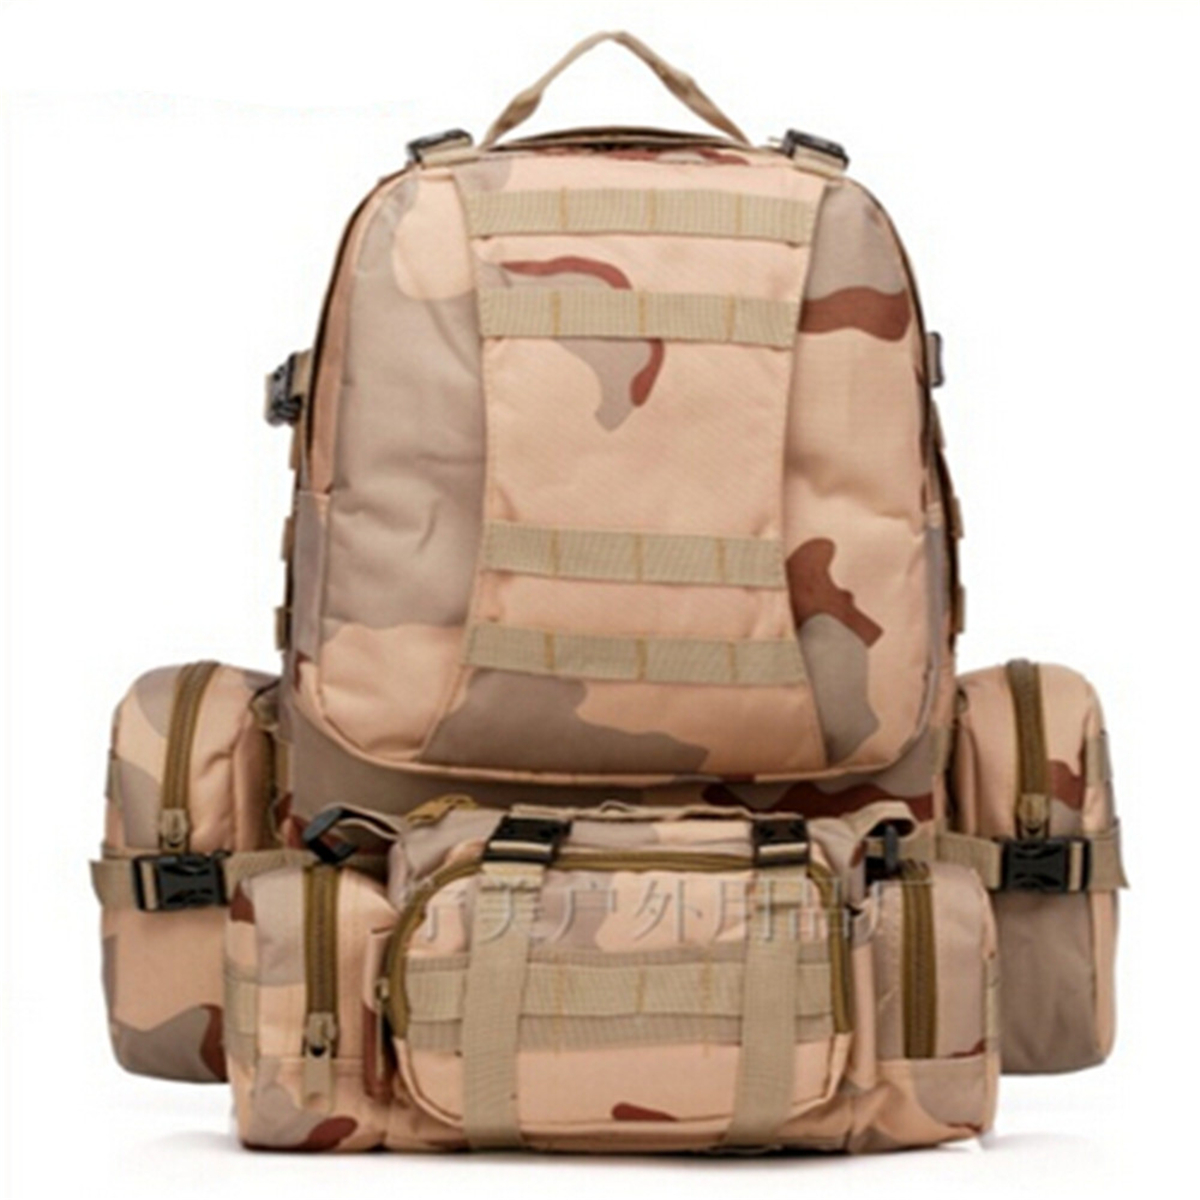 55L Military Tactical Army Backpack Rucksack Camping Hiking Trekking Bag